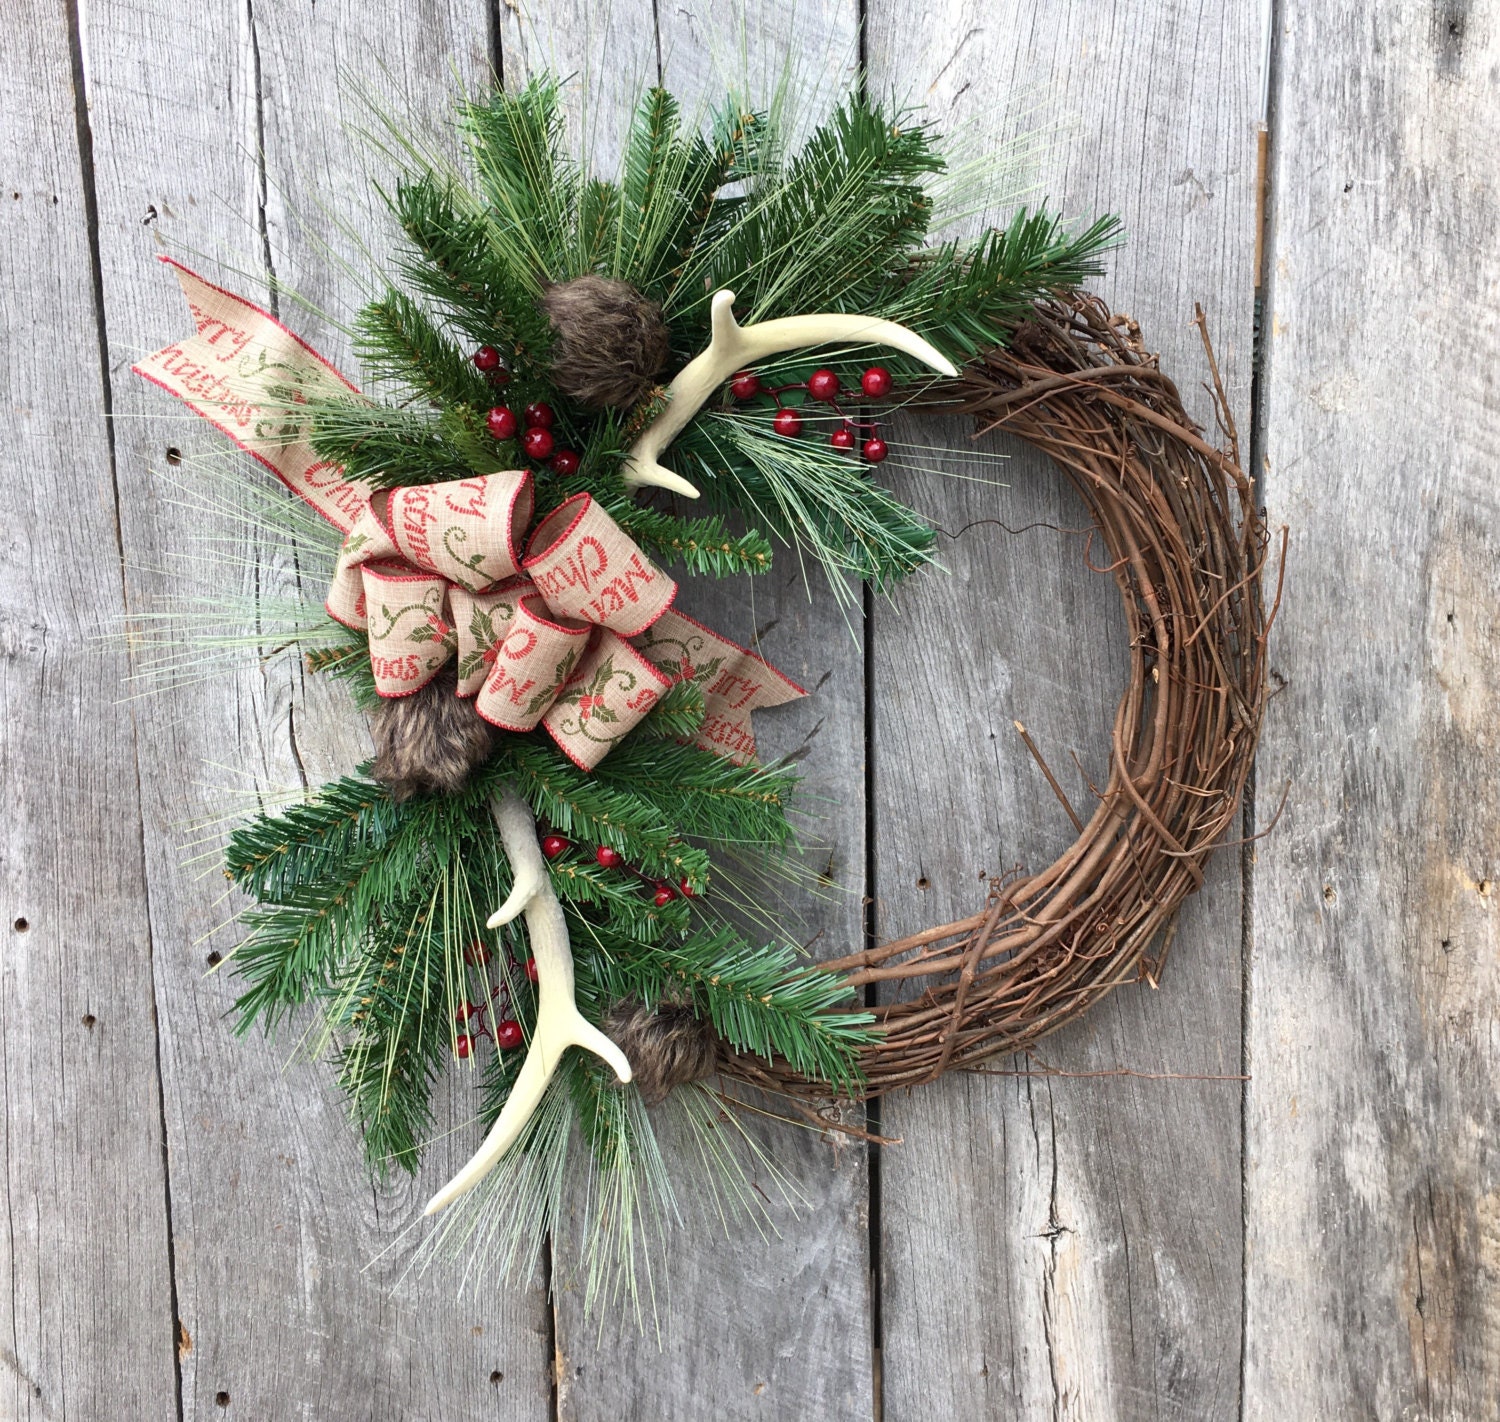 Antler Wreath Rustic Wreath Christmas Wreath with Antlers